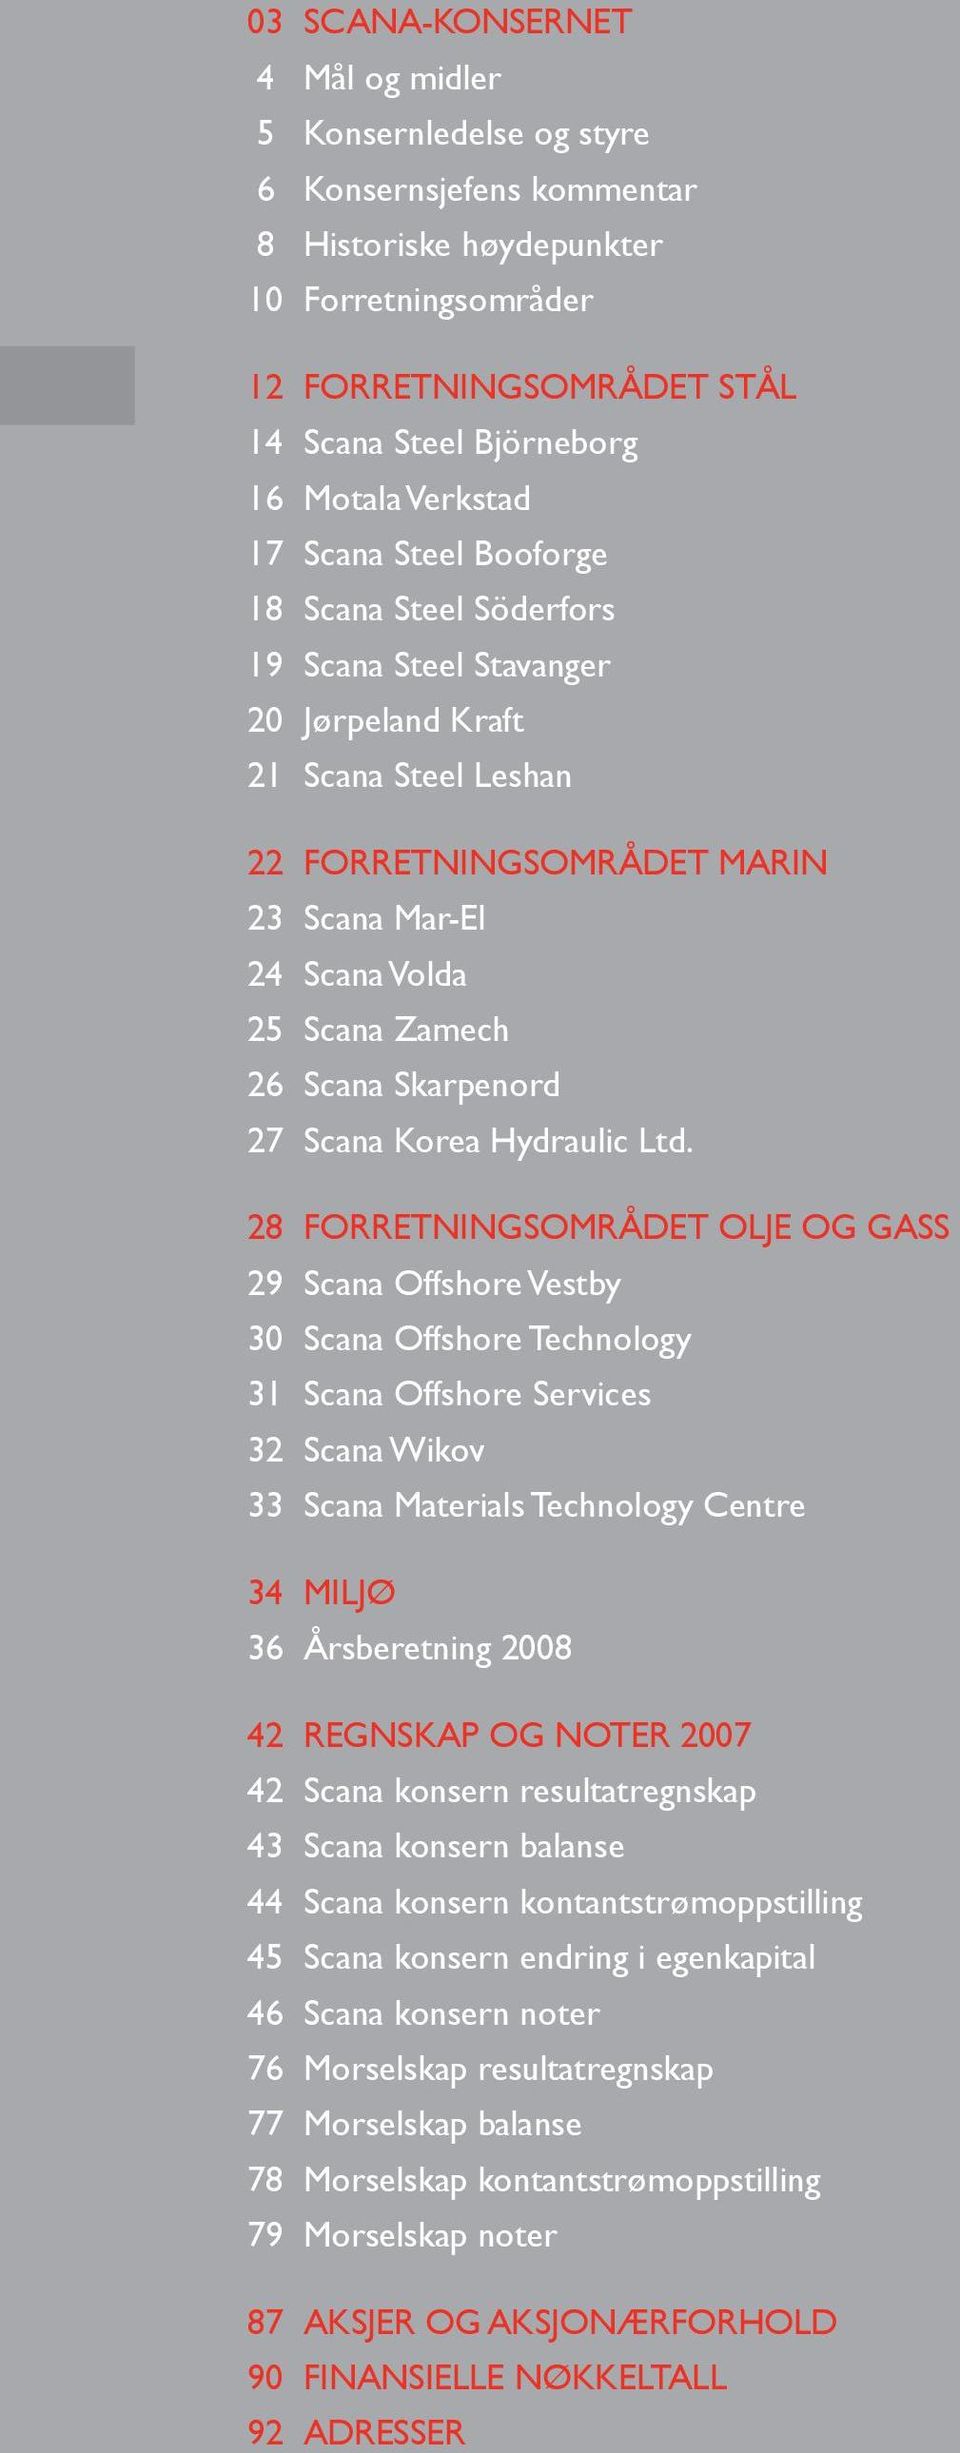 26 Scana Skarpenord 27 Scana Korea Hydraulic Ltd.